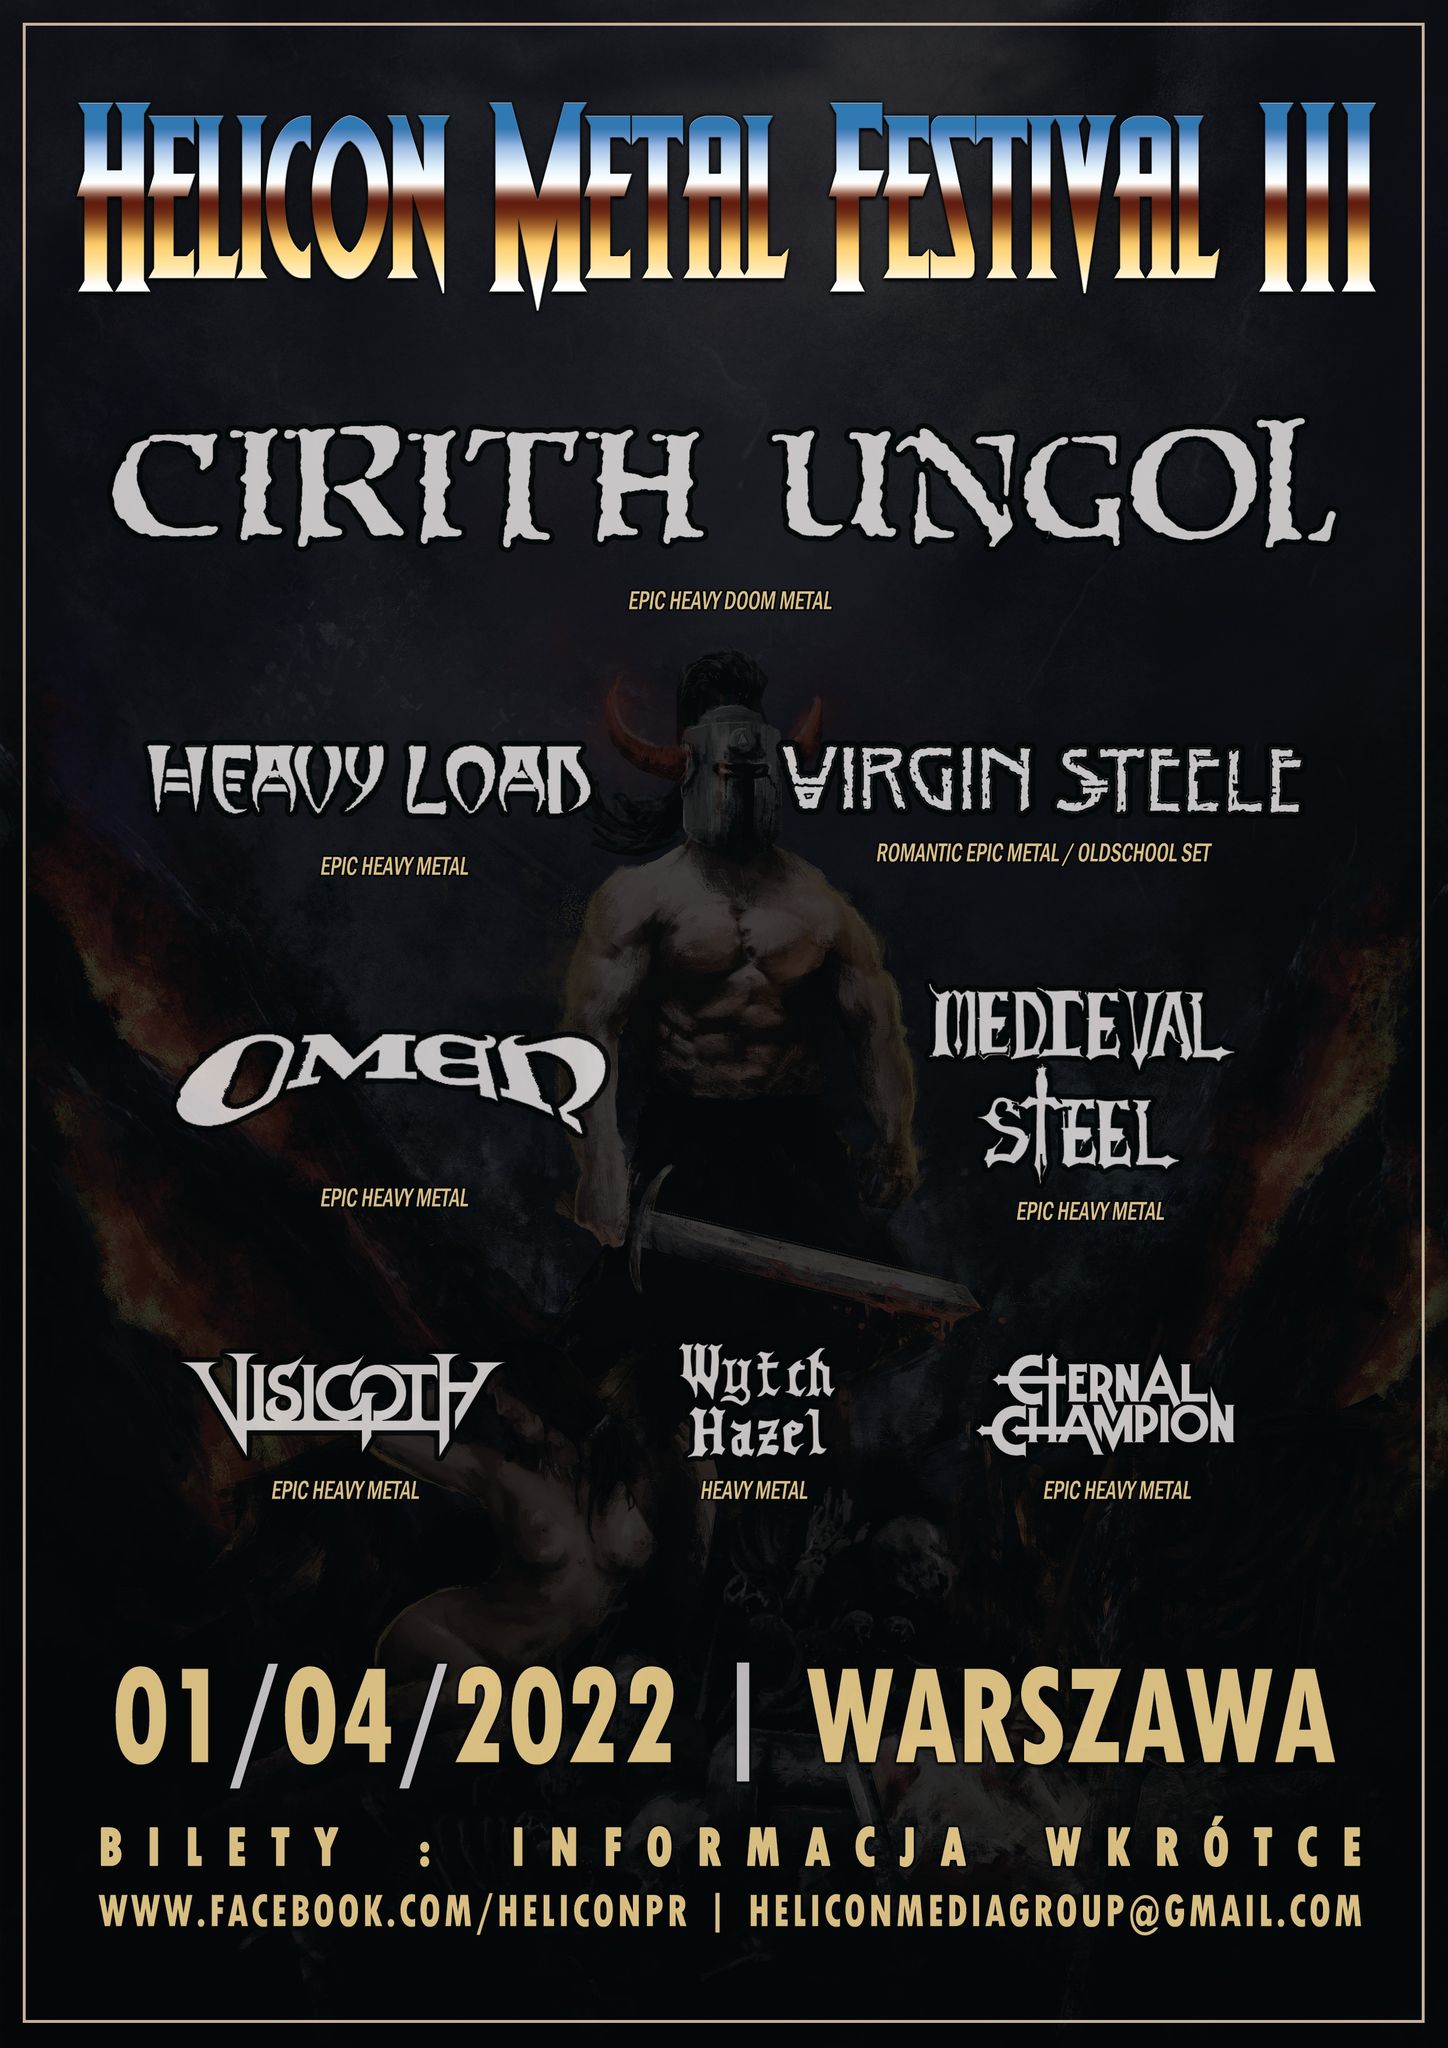 Helicon Metal Festival III Helicon Metal Festival III | Cirith Ungol Online